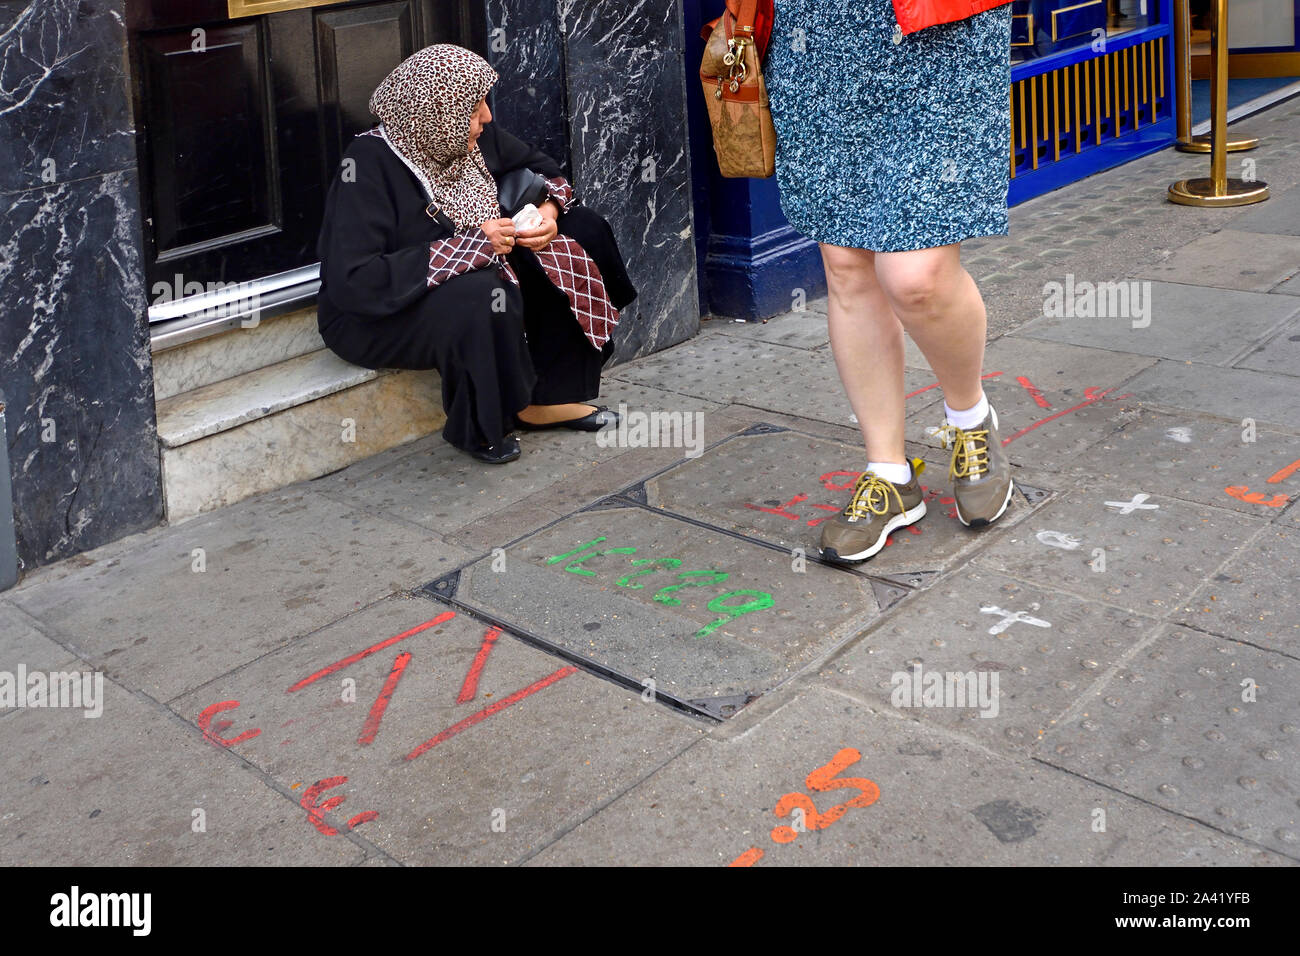 London, England, UK. Asian woman wearing a headscarf sitting in a doorway, a woman walking past Stock Photo